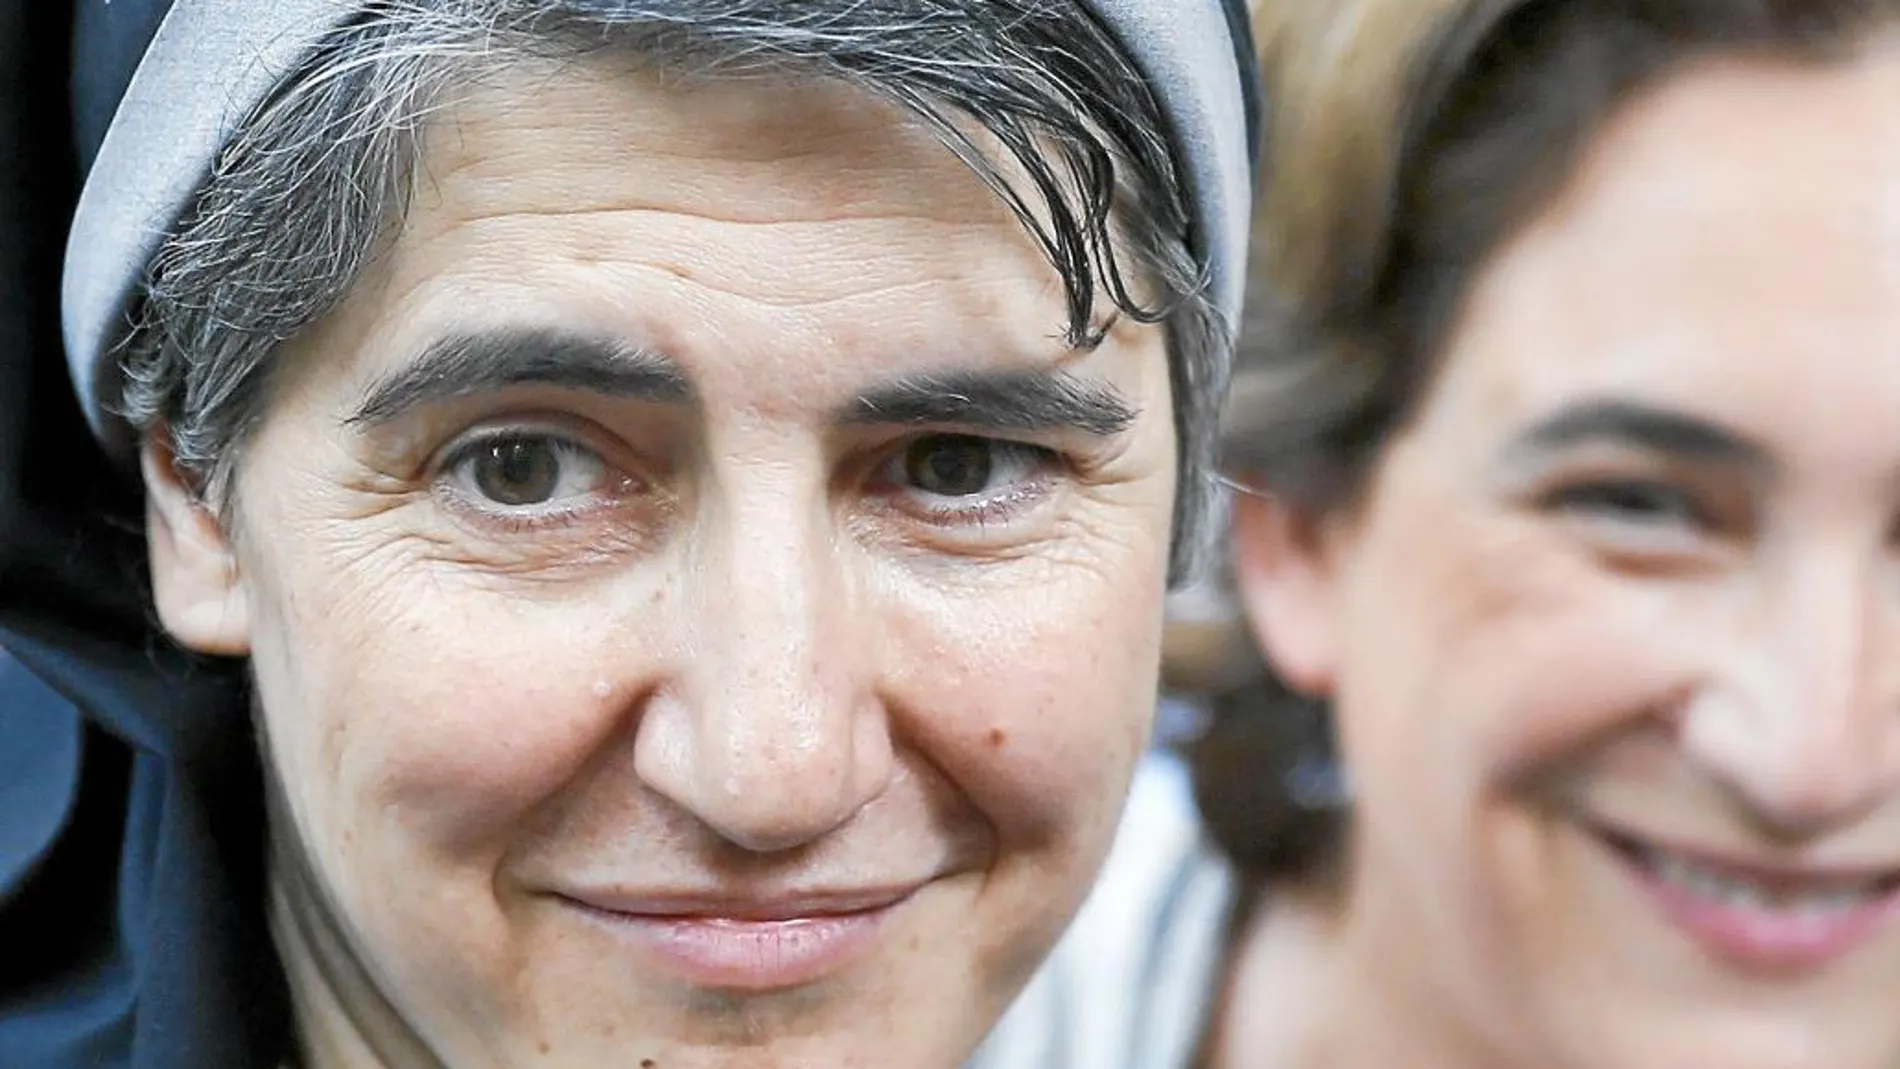 La religiosa Teresa Forcades y la candidata a la alcaldía de Barcelona, Ada Colau